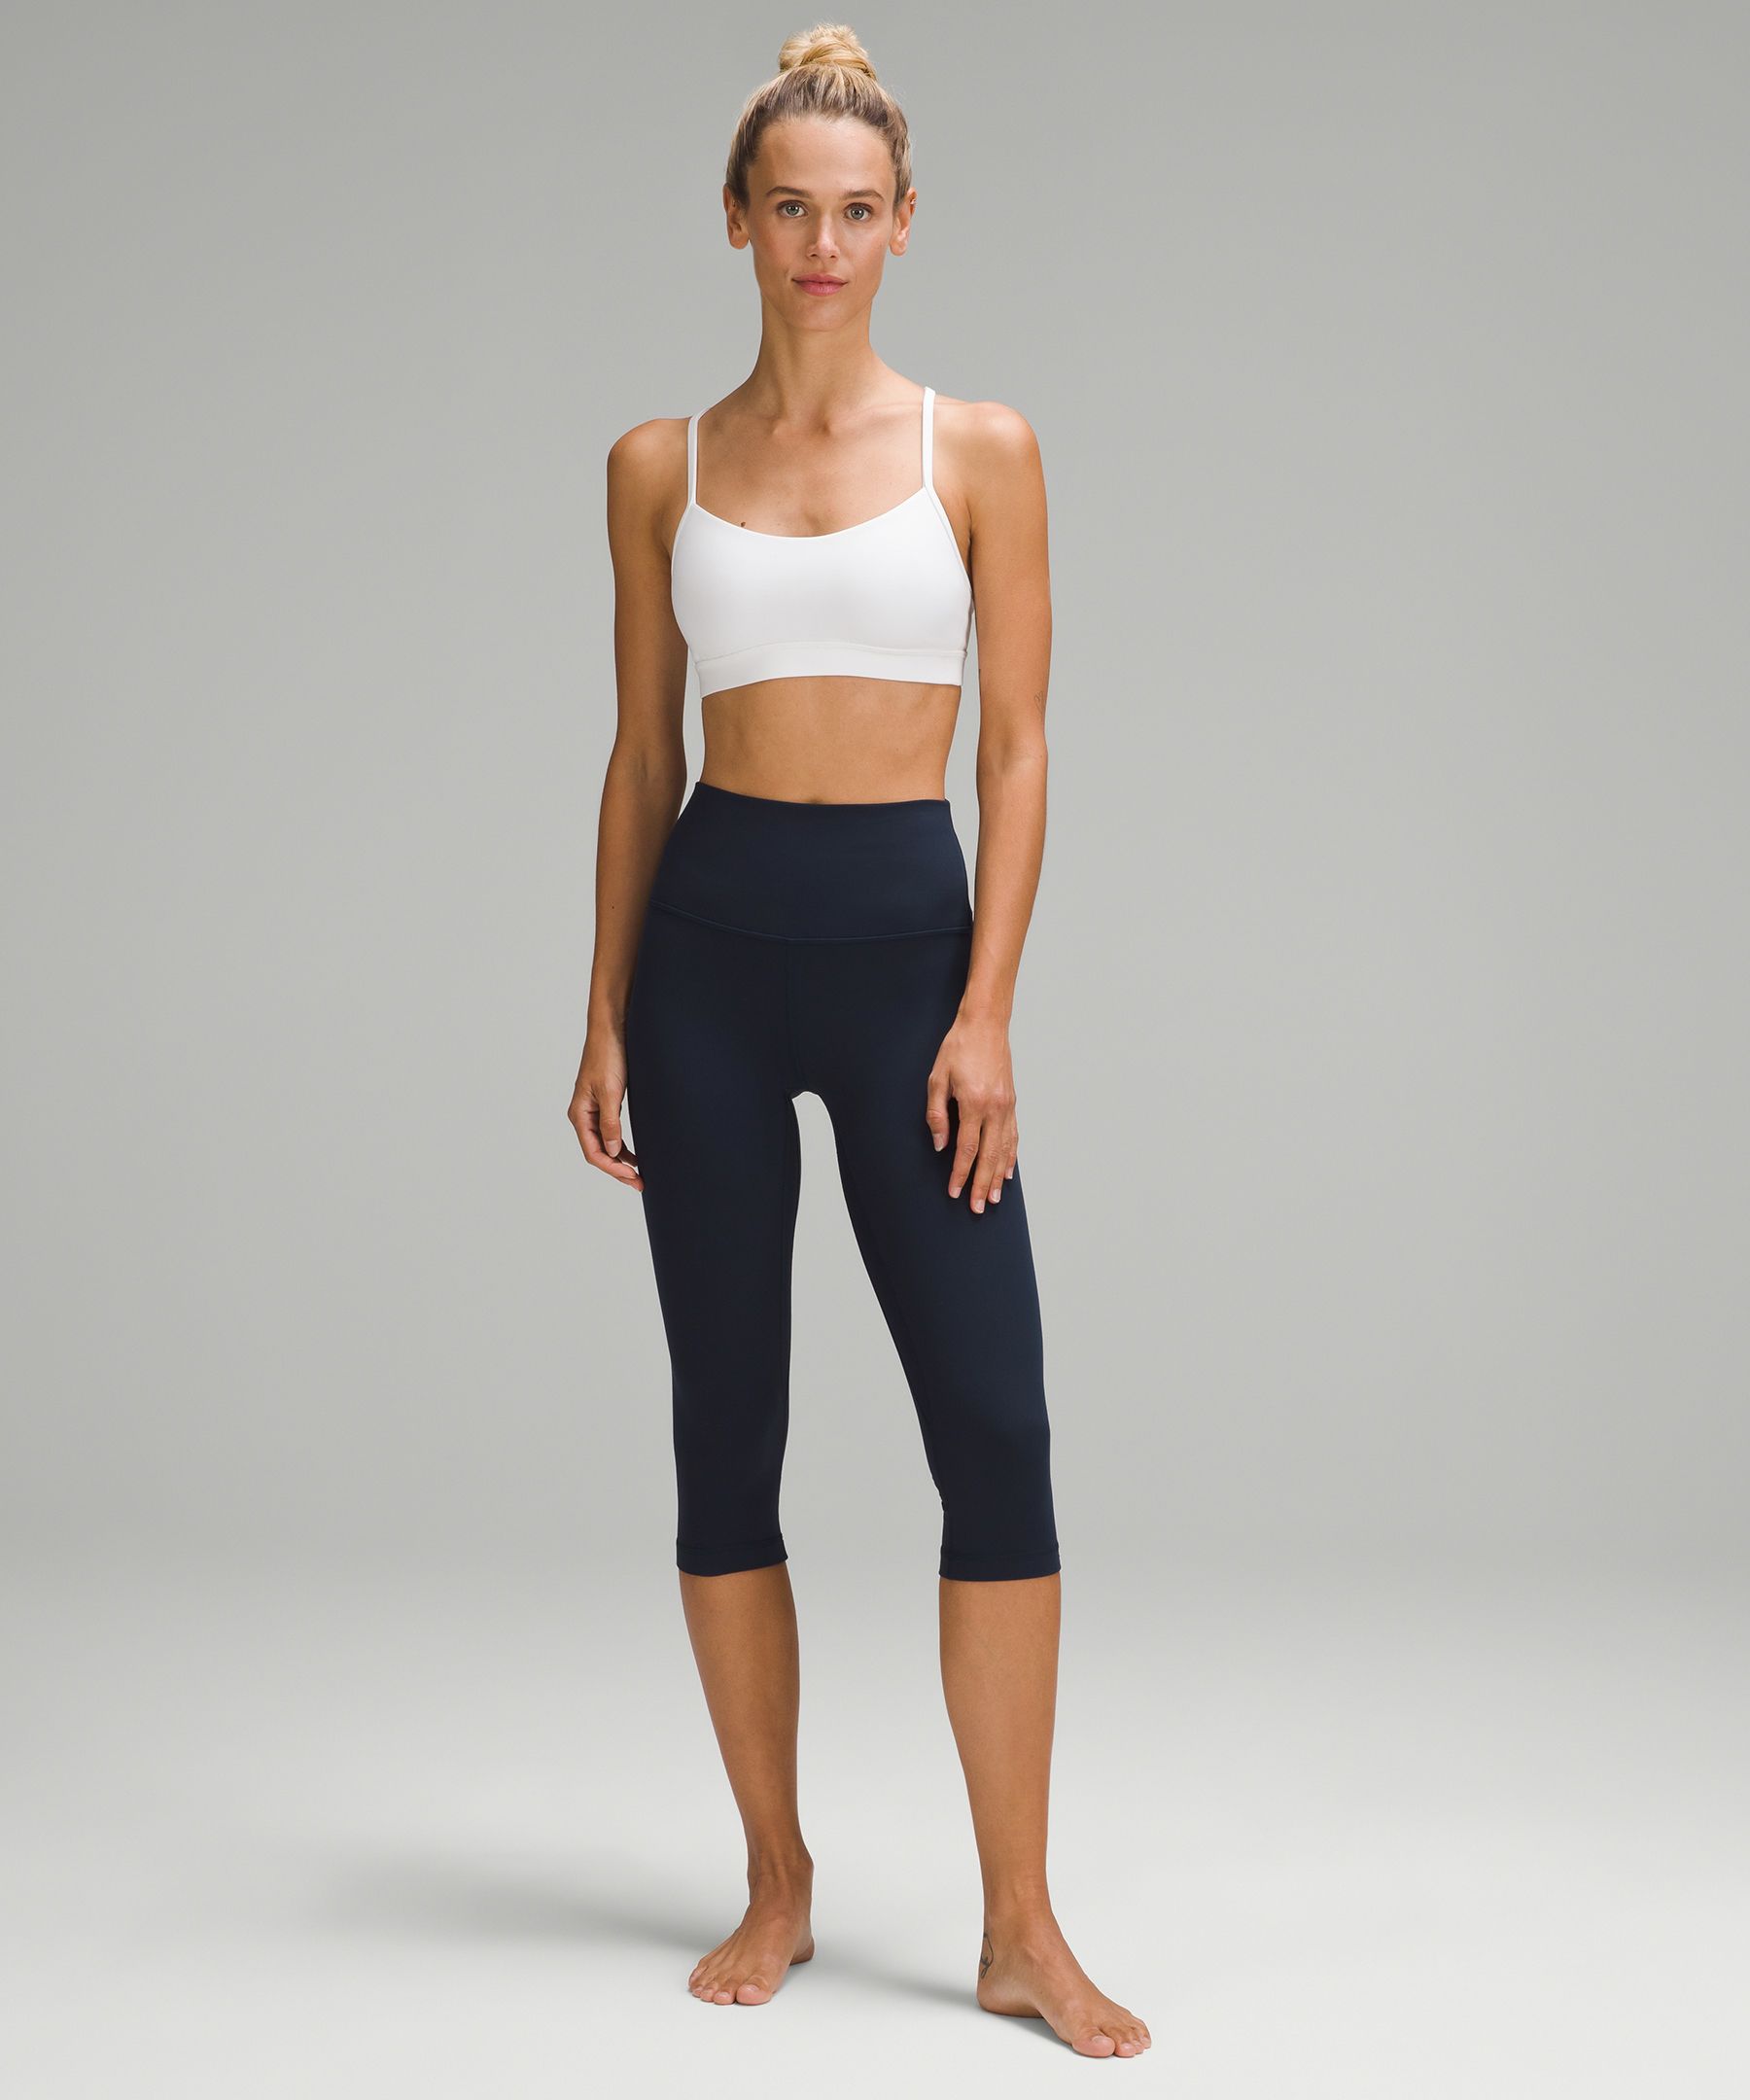 Lululemon black leggings capris size 10 stretch - $37 - From Adriana